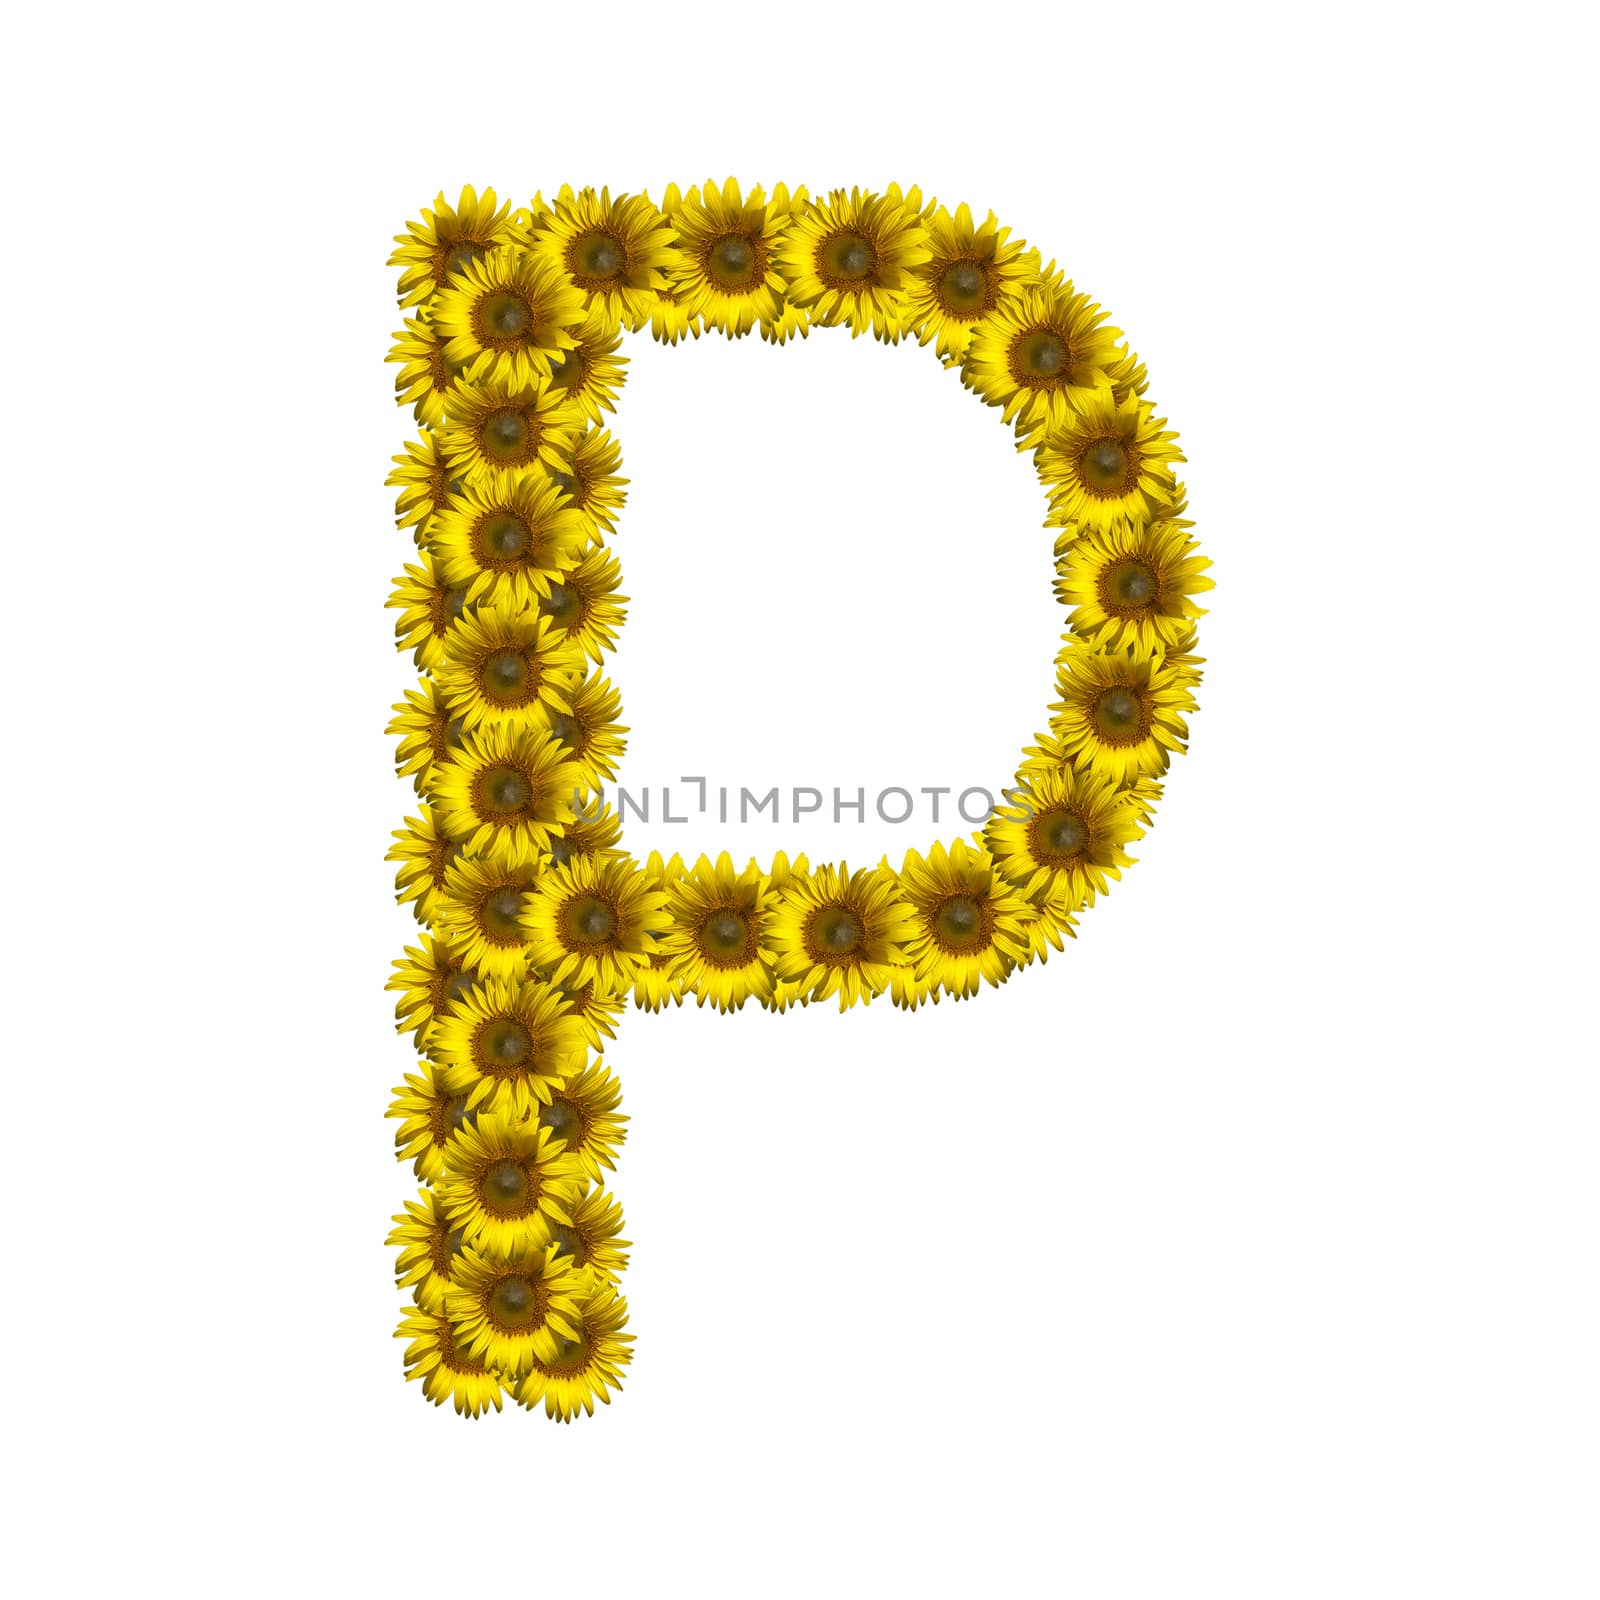 Isolated sunflower alphabet P by Exsodus